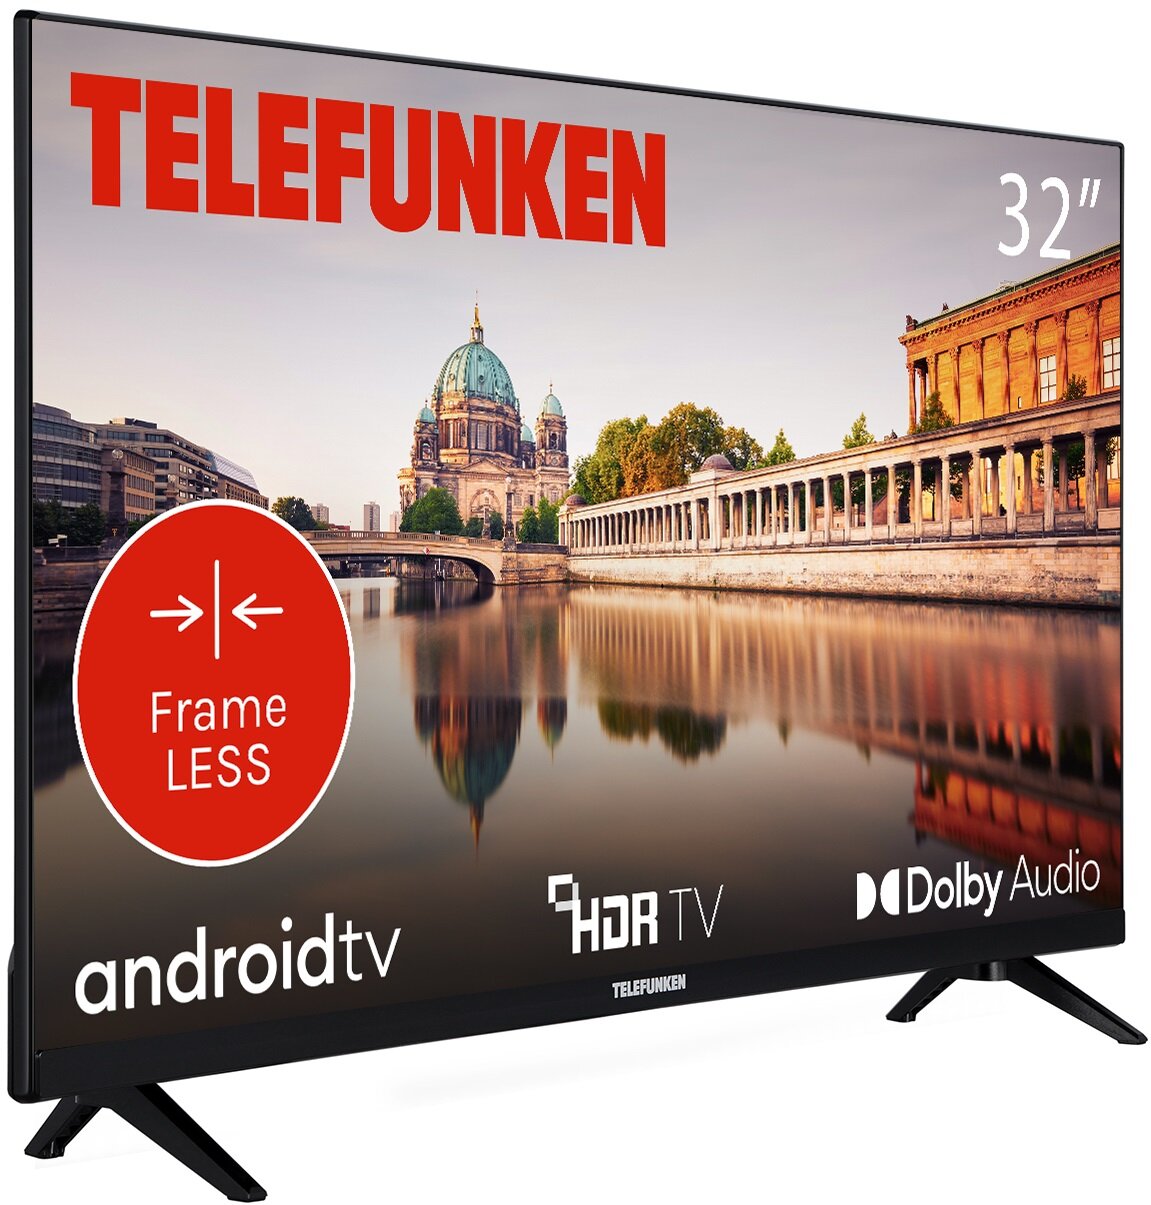 Telefunken 32hl8450 32 Led Android Tv Telewizor Niskie Ceny I Opinie W Media Expert 6537